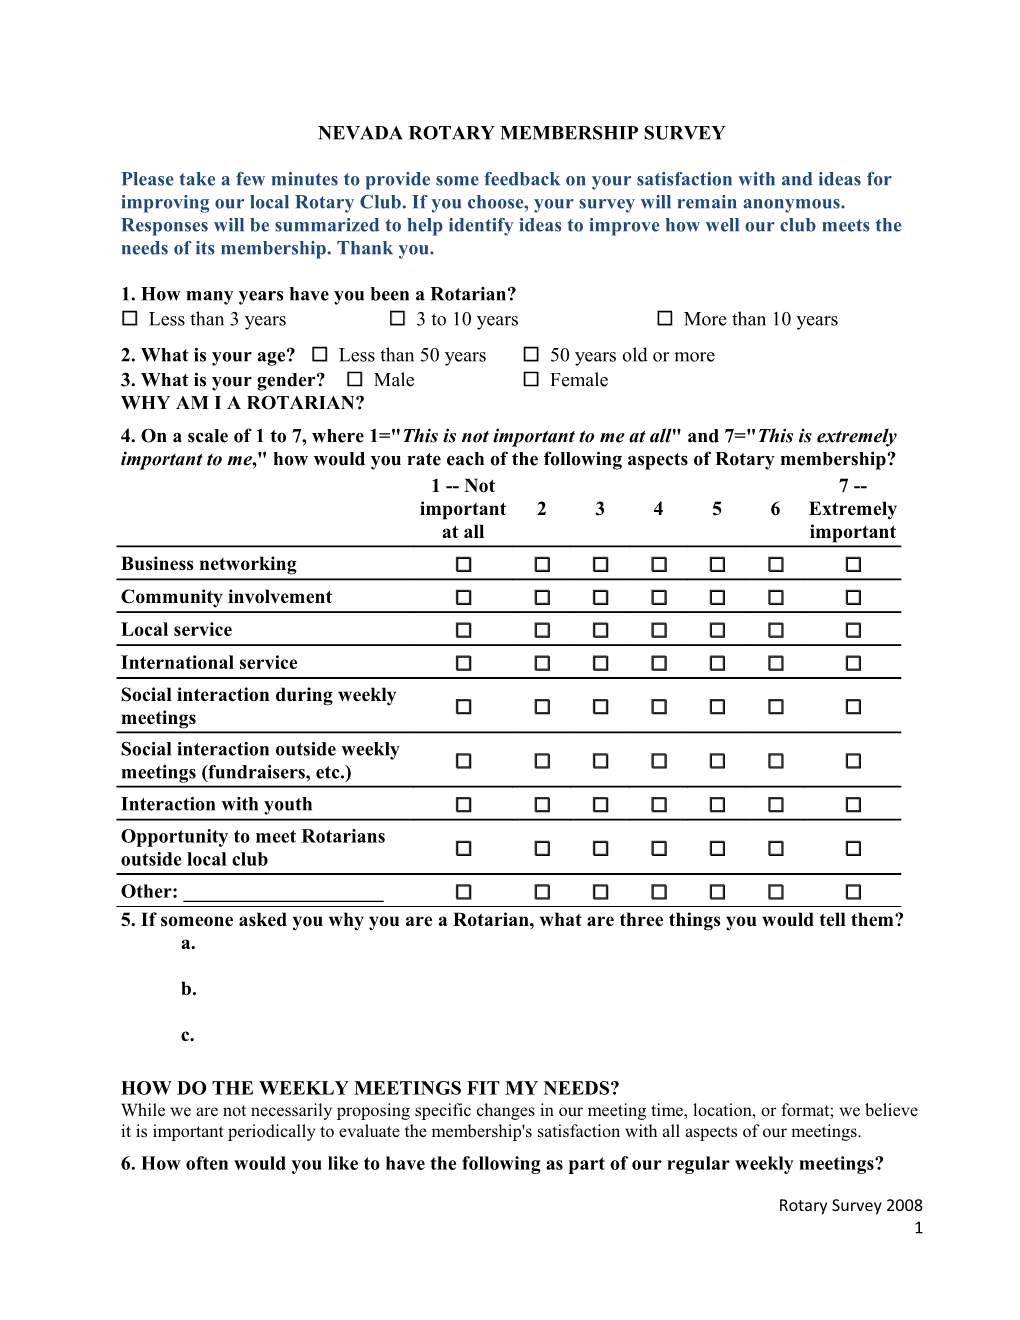 Nevada Rotary Membership Survey